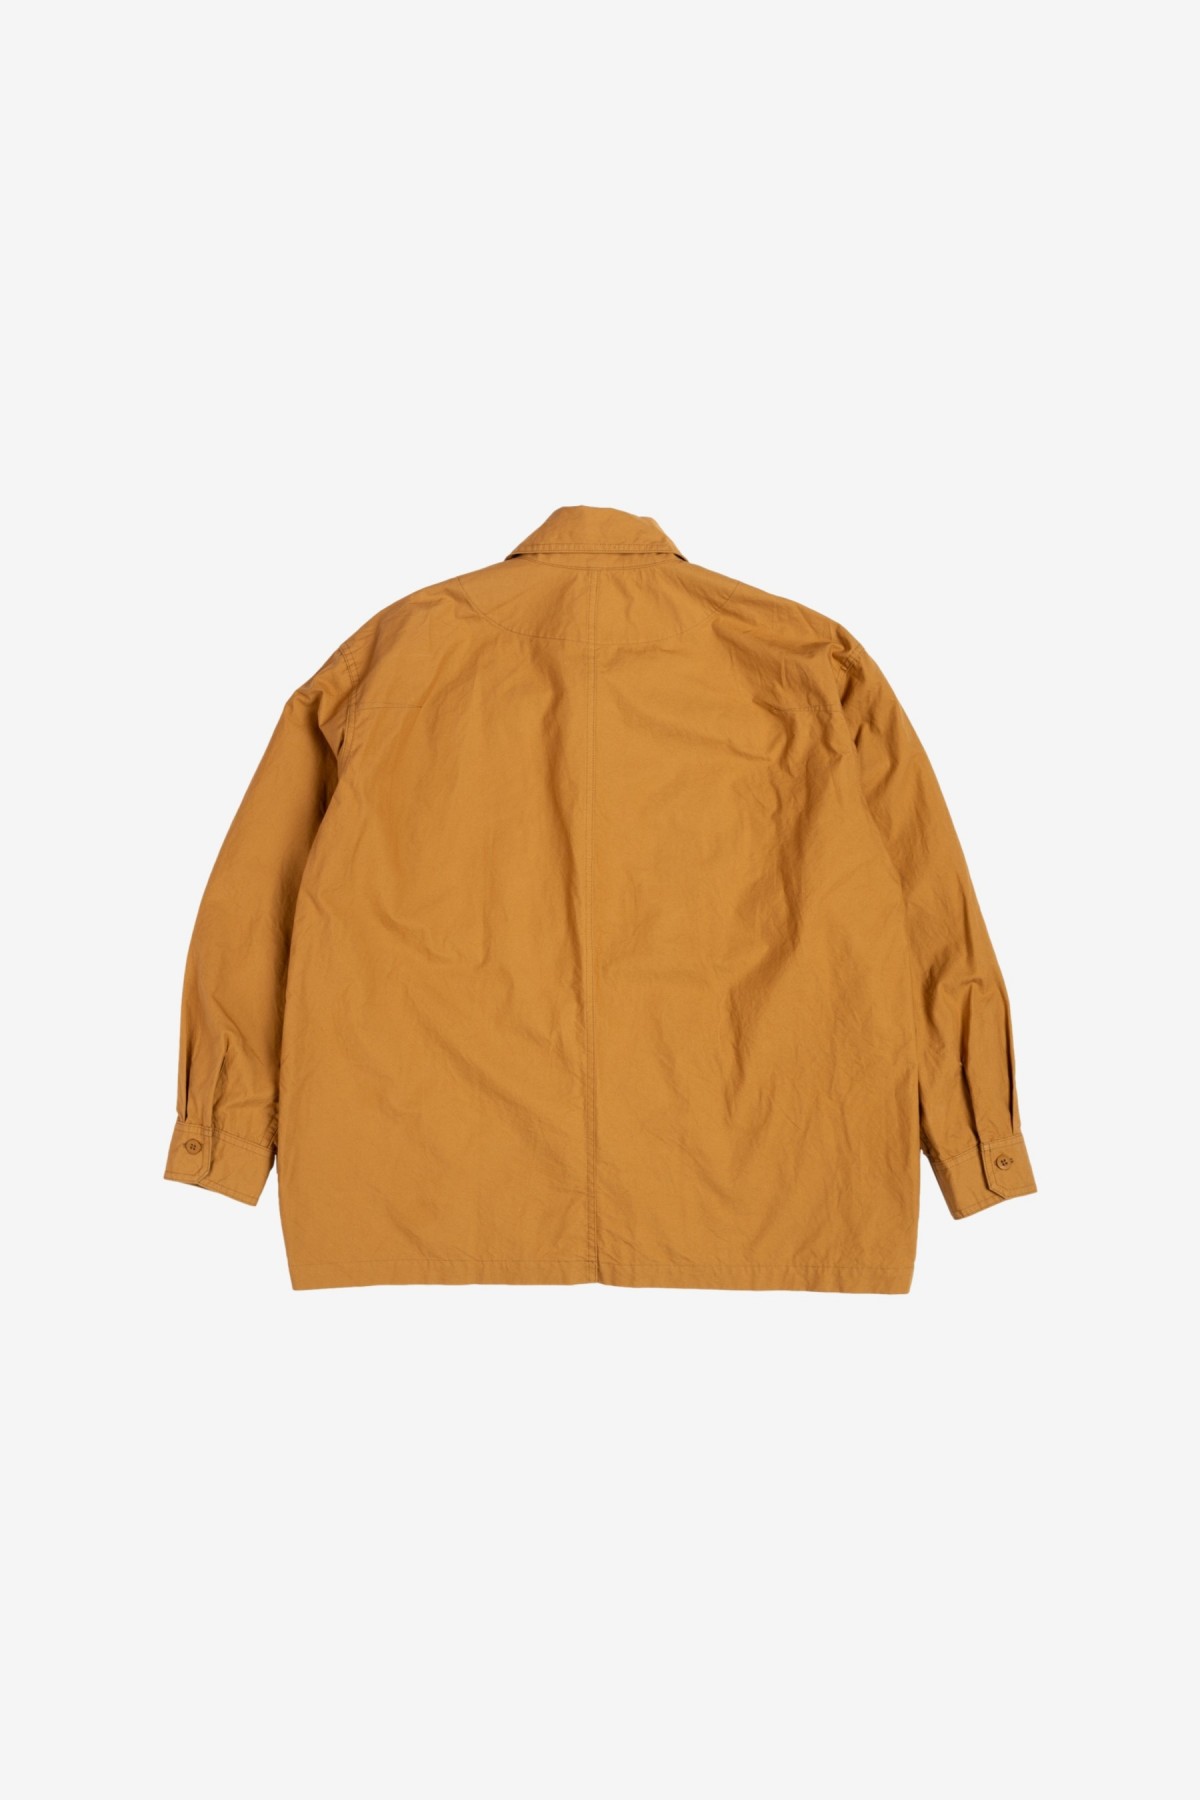 ts(s) High Density Cotton Canvas Cloth Military Shirt Jacket in Ocher